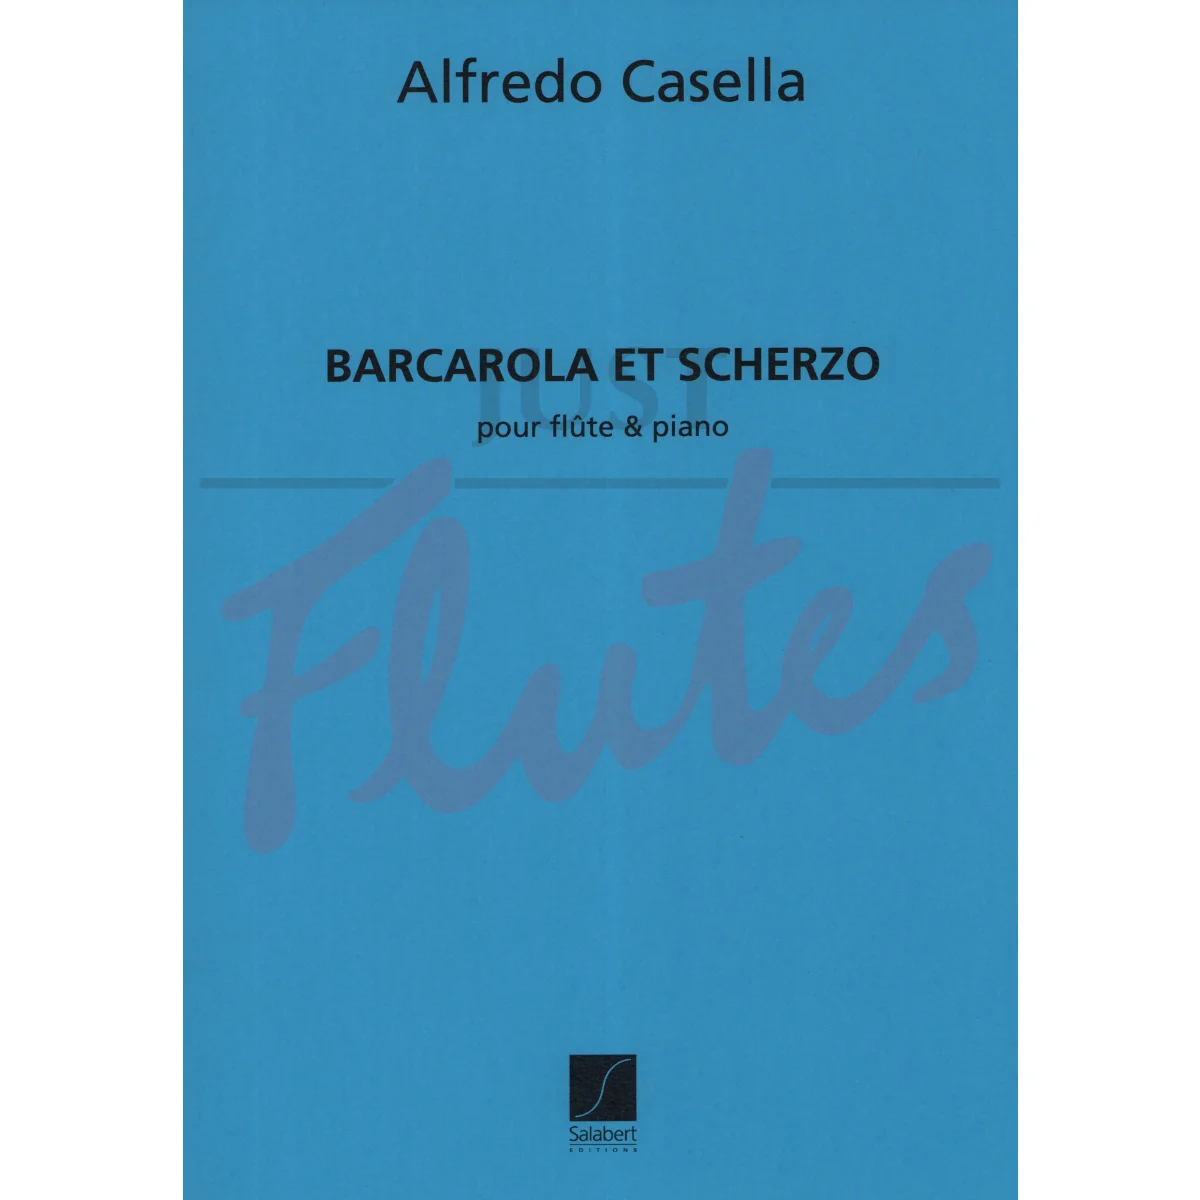 Barcarolle et Scherzo for Flute and Piano